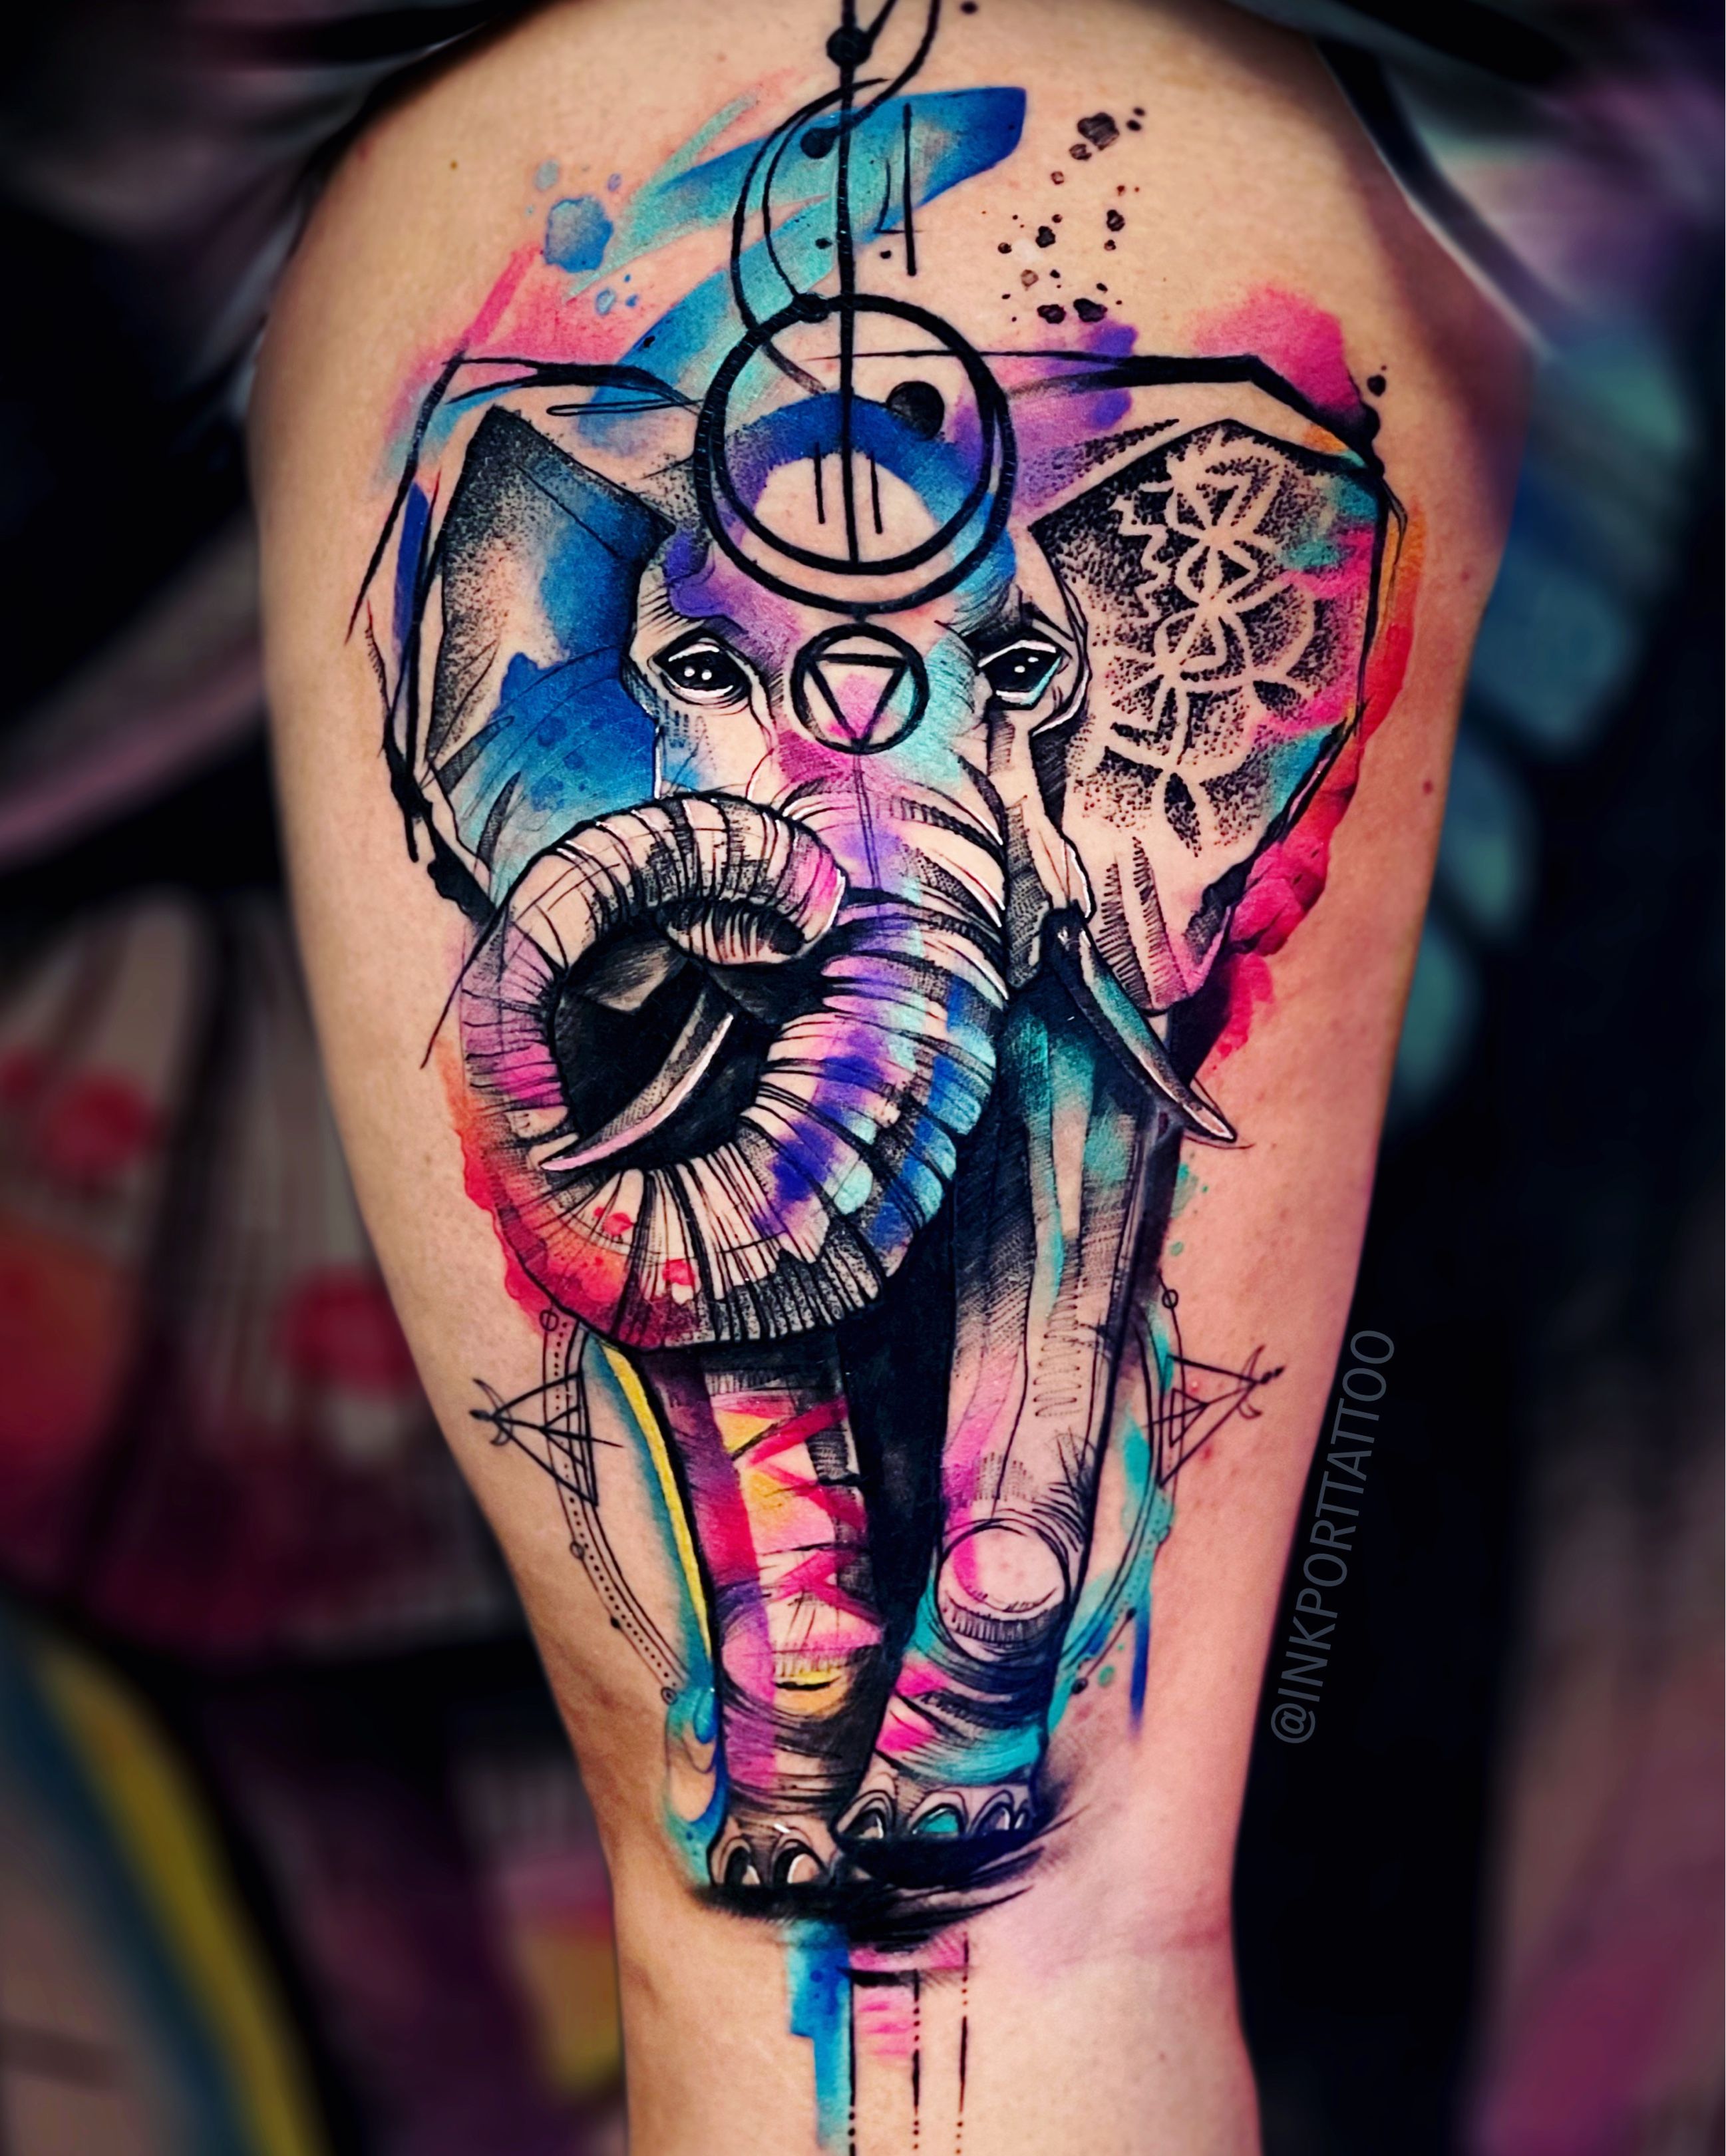  history İletişimContact boramesutpalasgmailcom  tattoo  lineworktattoo etching mammoth elephant elephanttattoo  Instagram